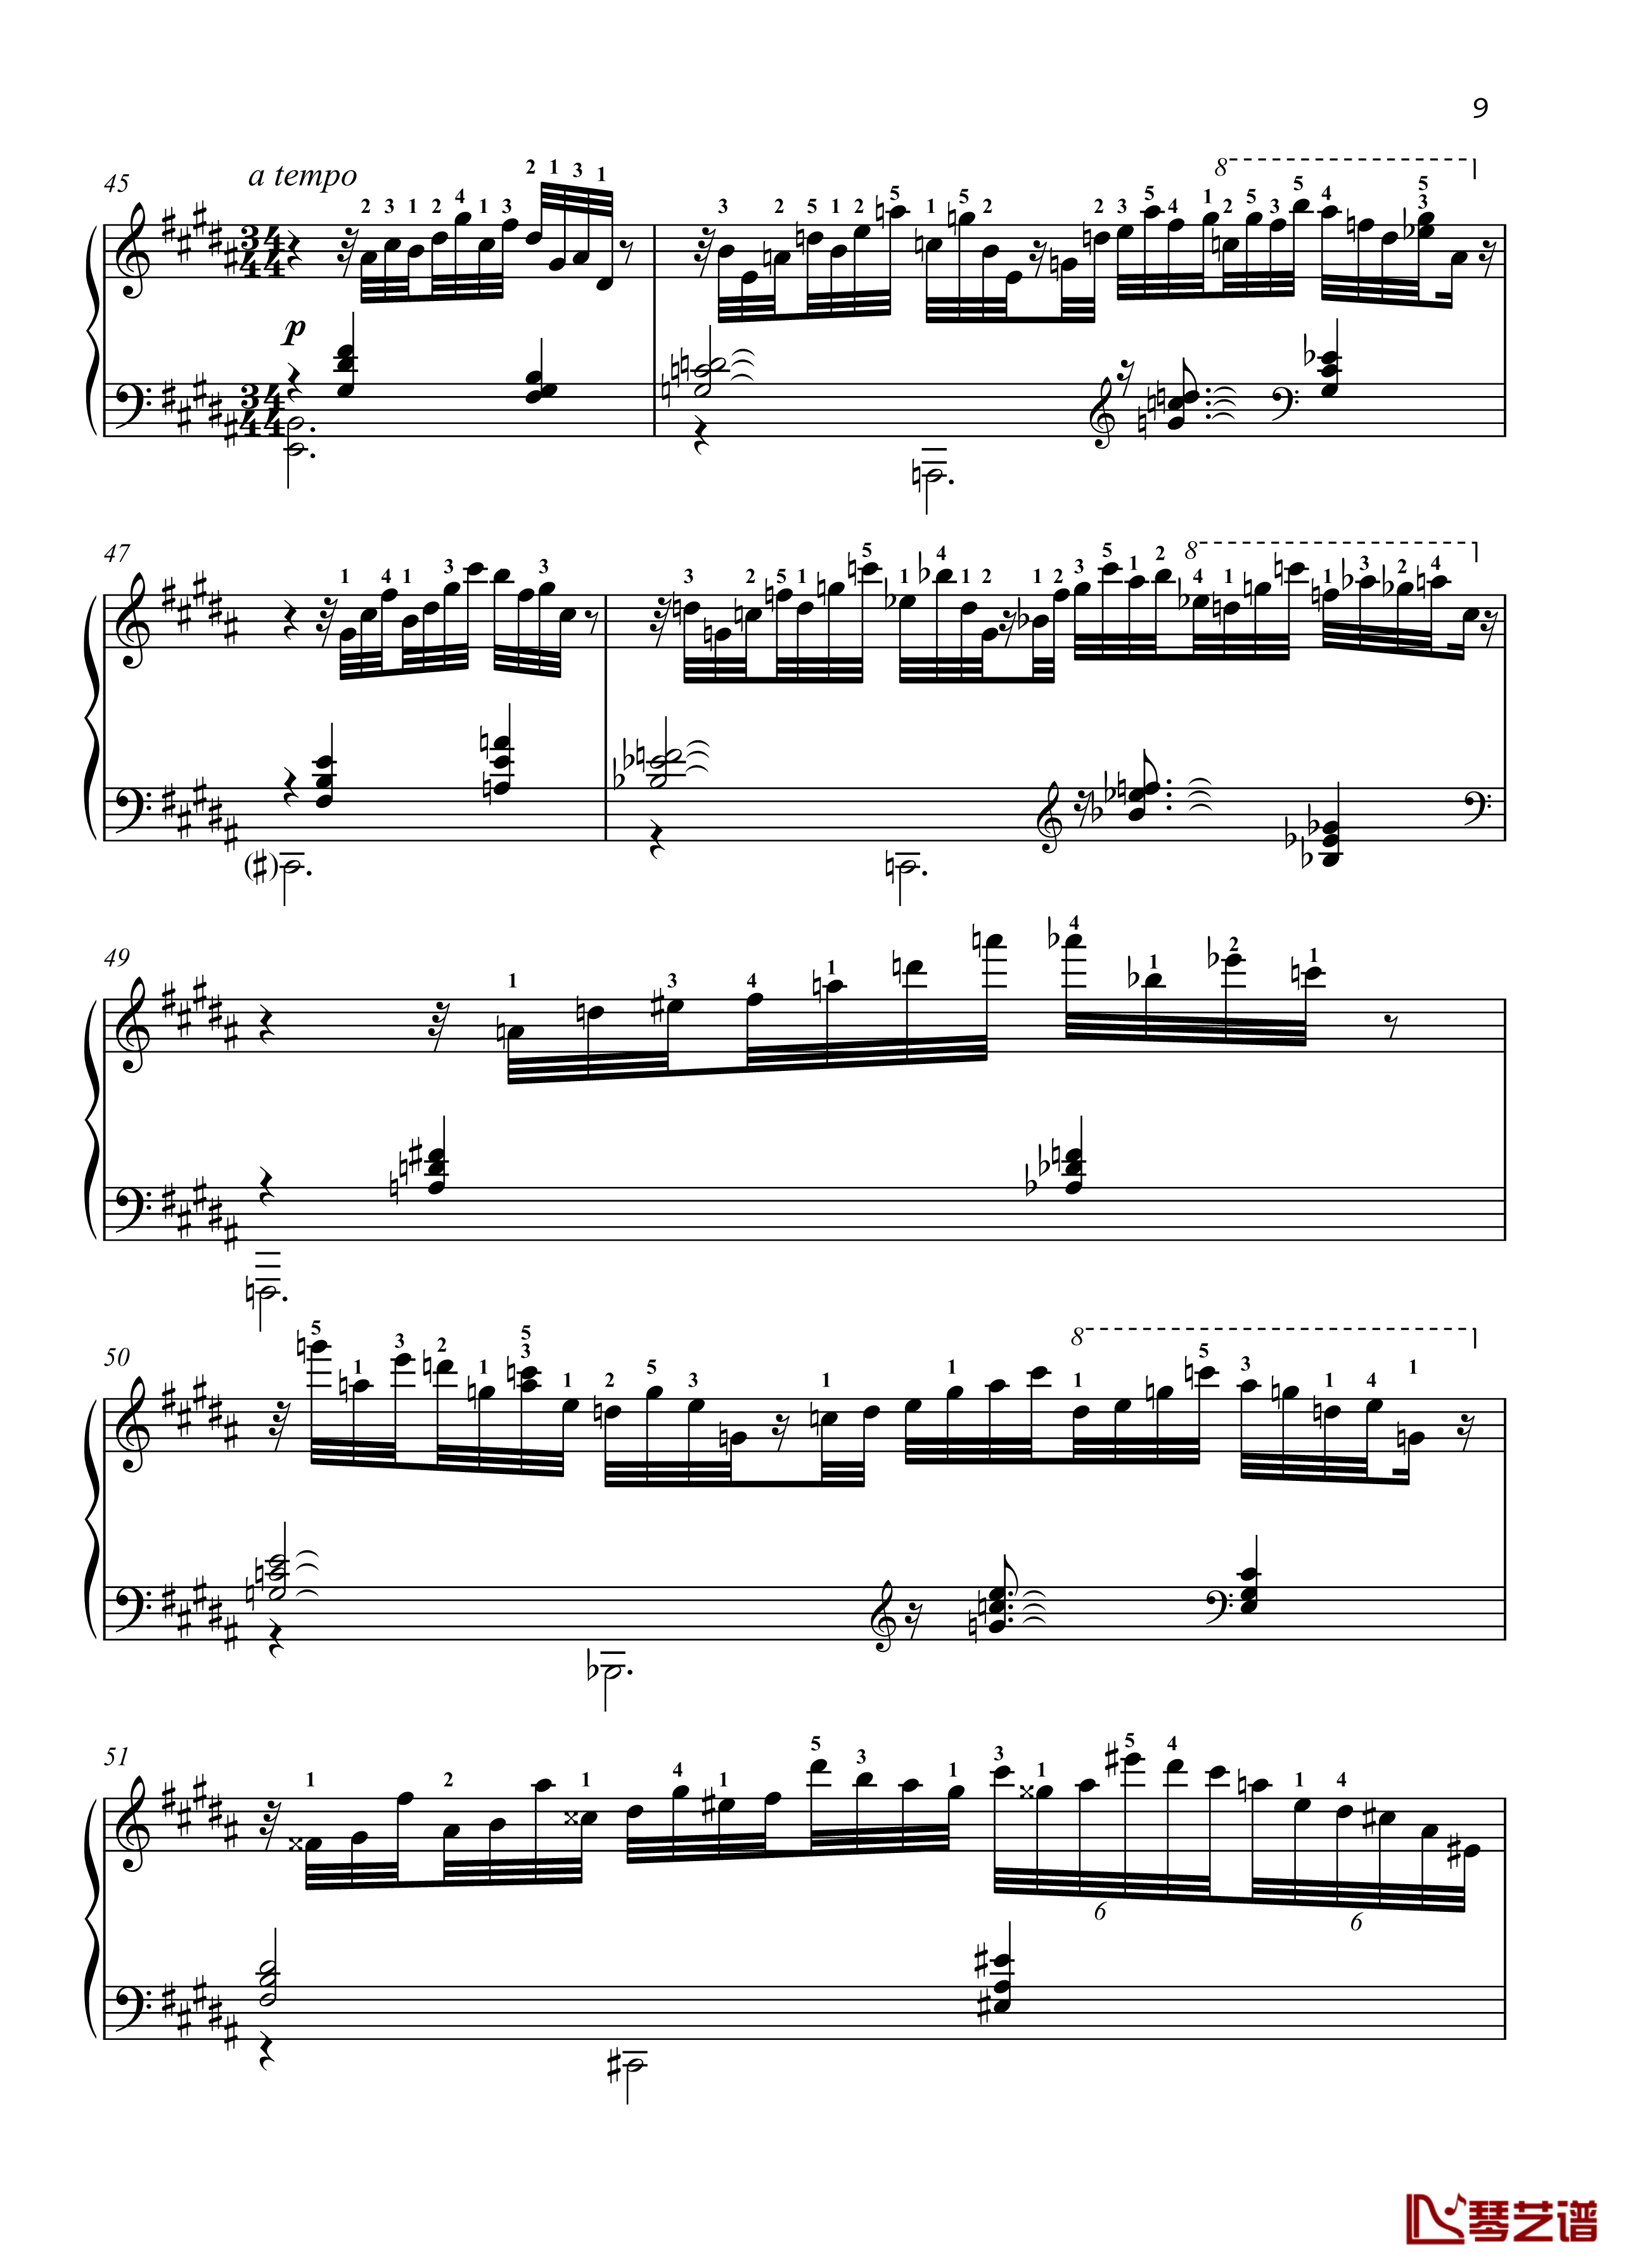 No. 4. Reminiscence钢琴谱-带指法-八首音乐会练习曲  Eight Concert ?tudes Op 40 - -爵士-尼古拉·凯帕斯汀9